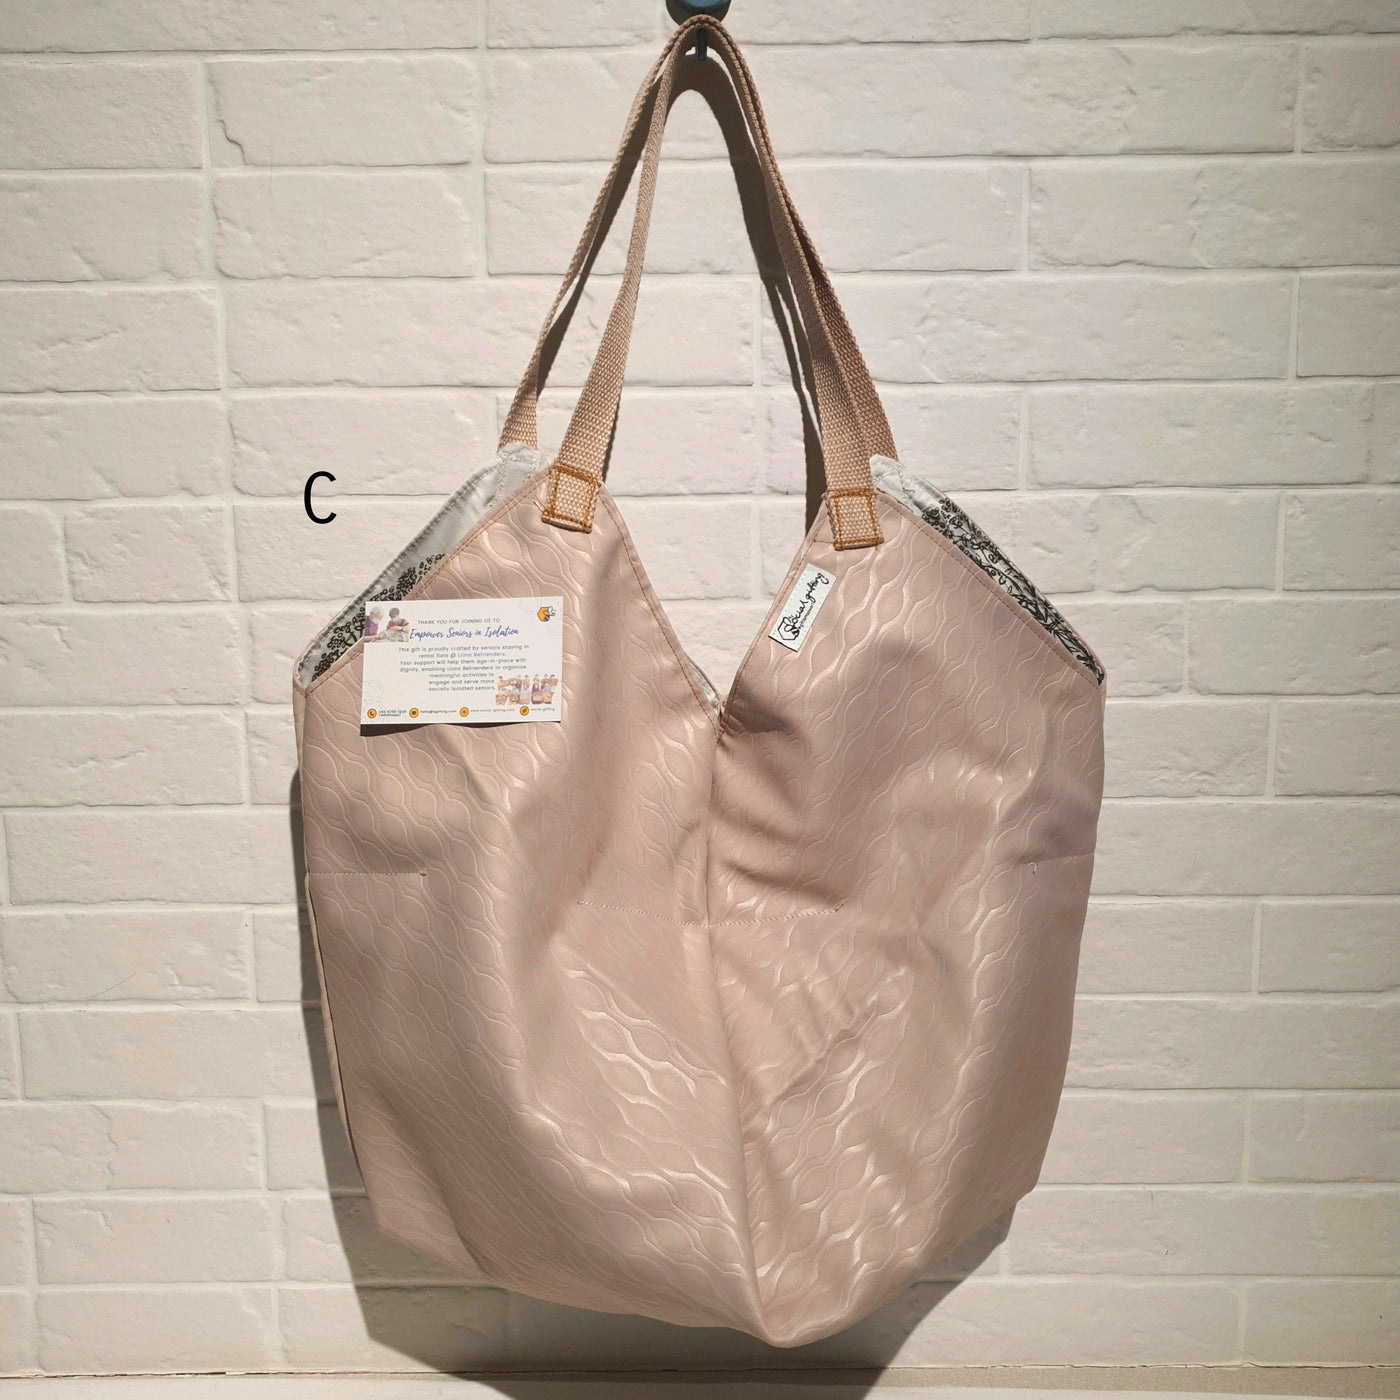 Upcycled V Shaped Tote Bag